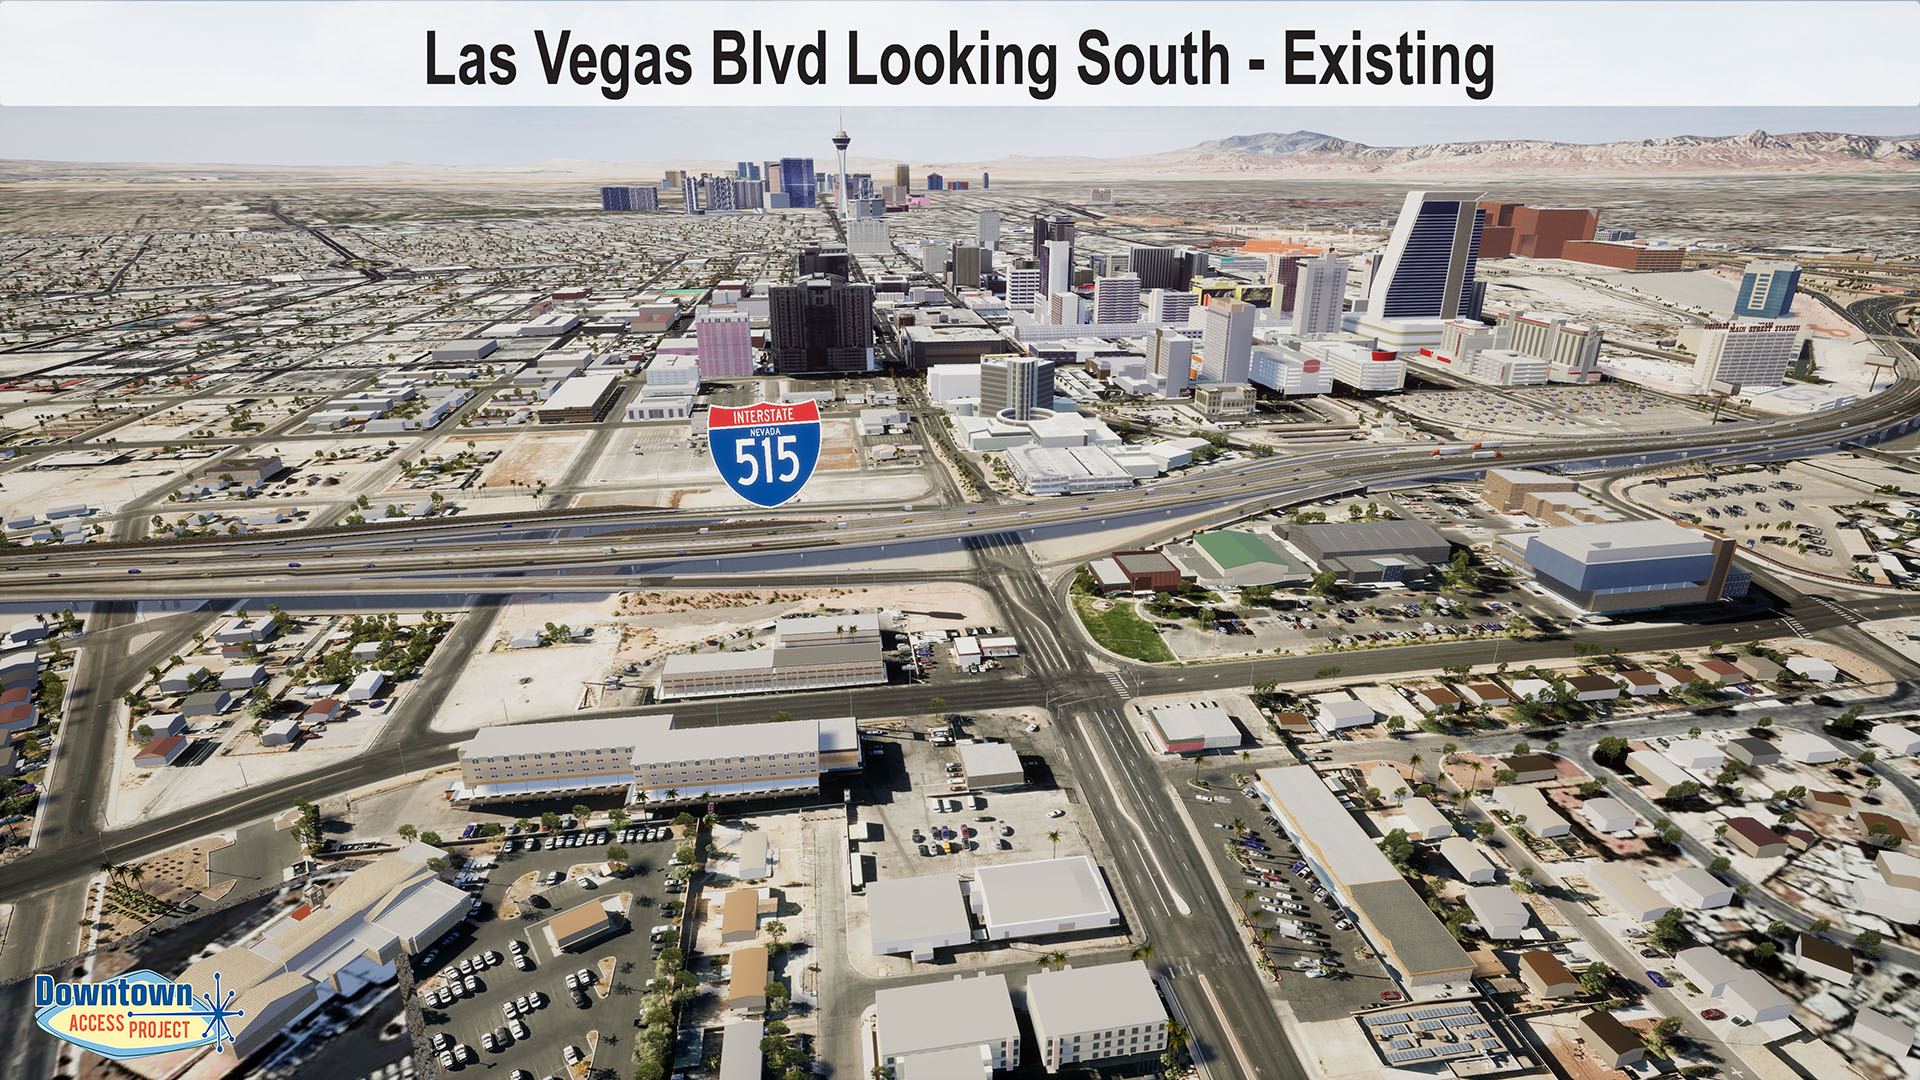 Las Vegas Blvd Looking South - Existing